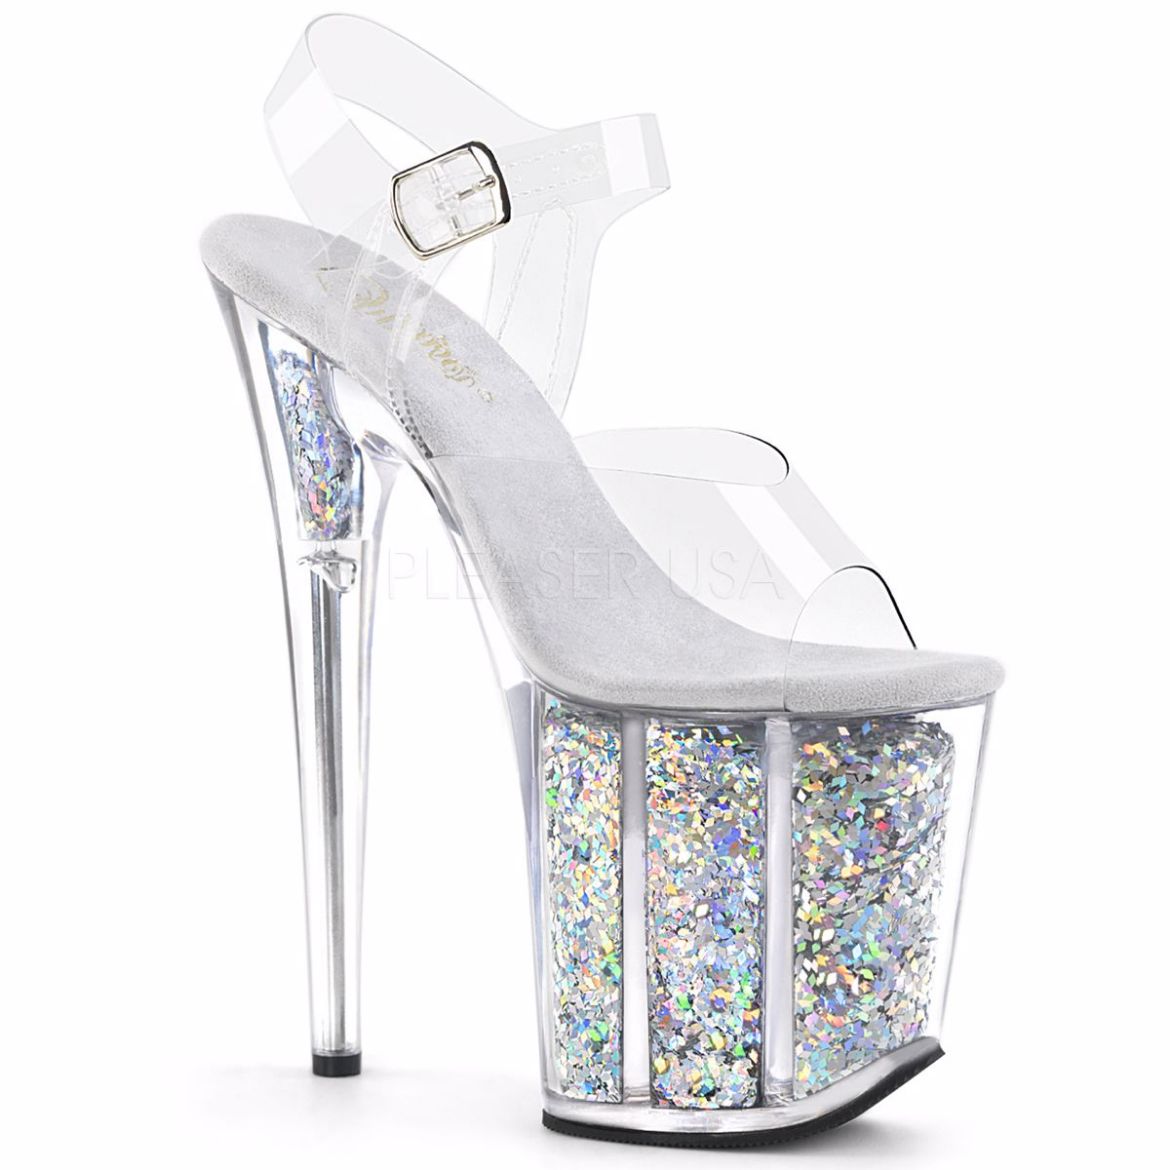 Product image of Pleaser Flamingo-808Gf Clear/Silver Multi Glitter, 8 inch (20.3 cm) Heel, 4 inch (10.2 cm) Platform Sandal Shoes